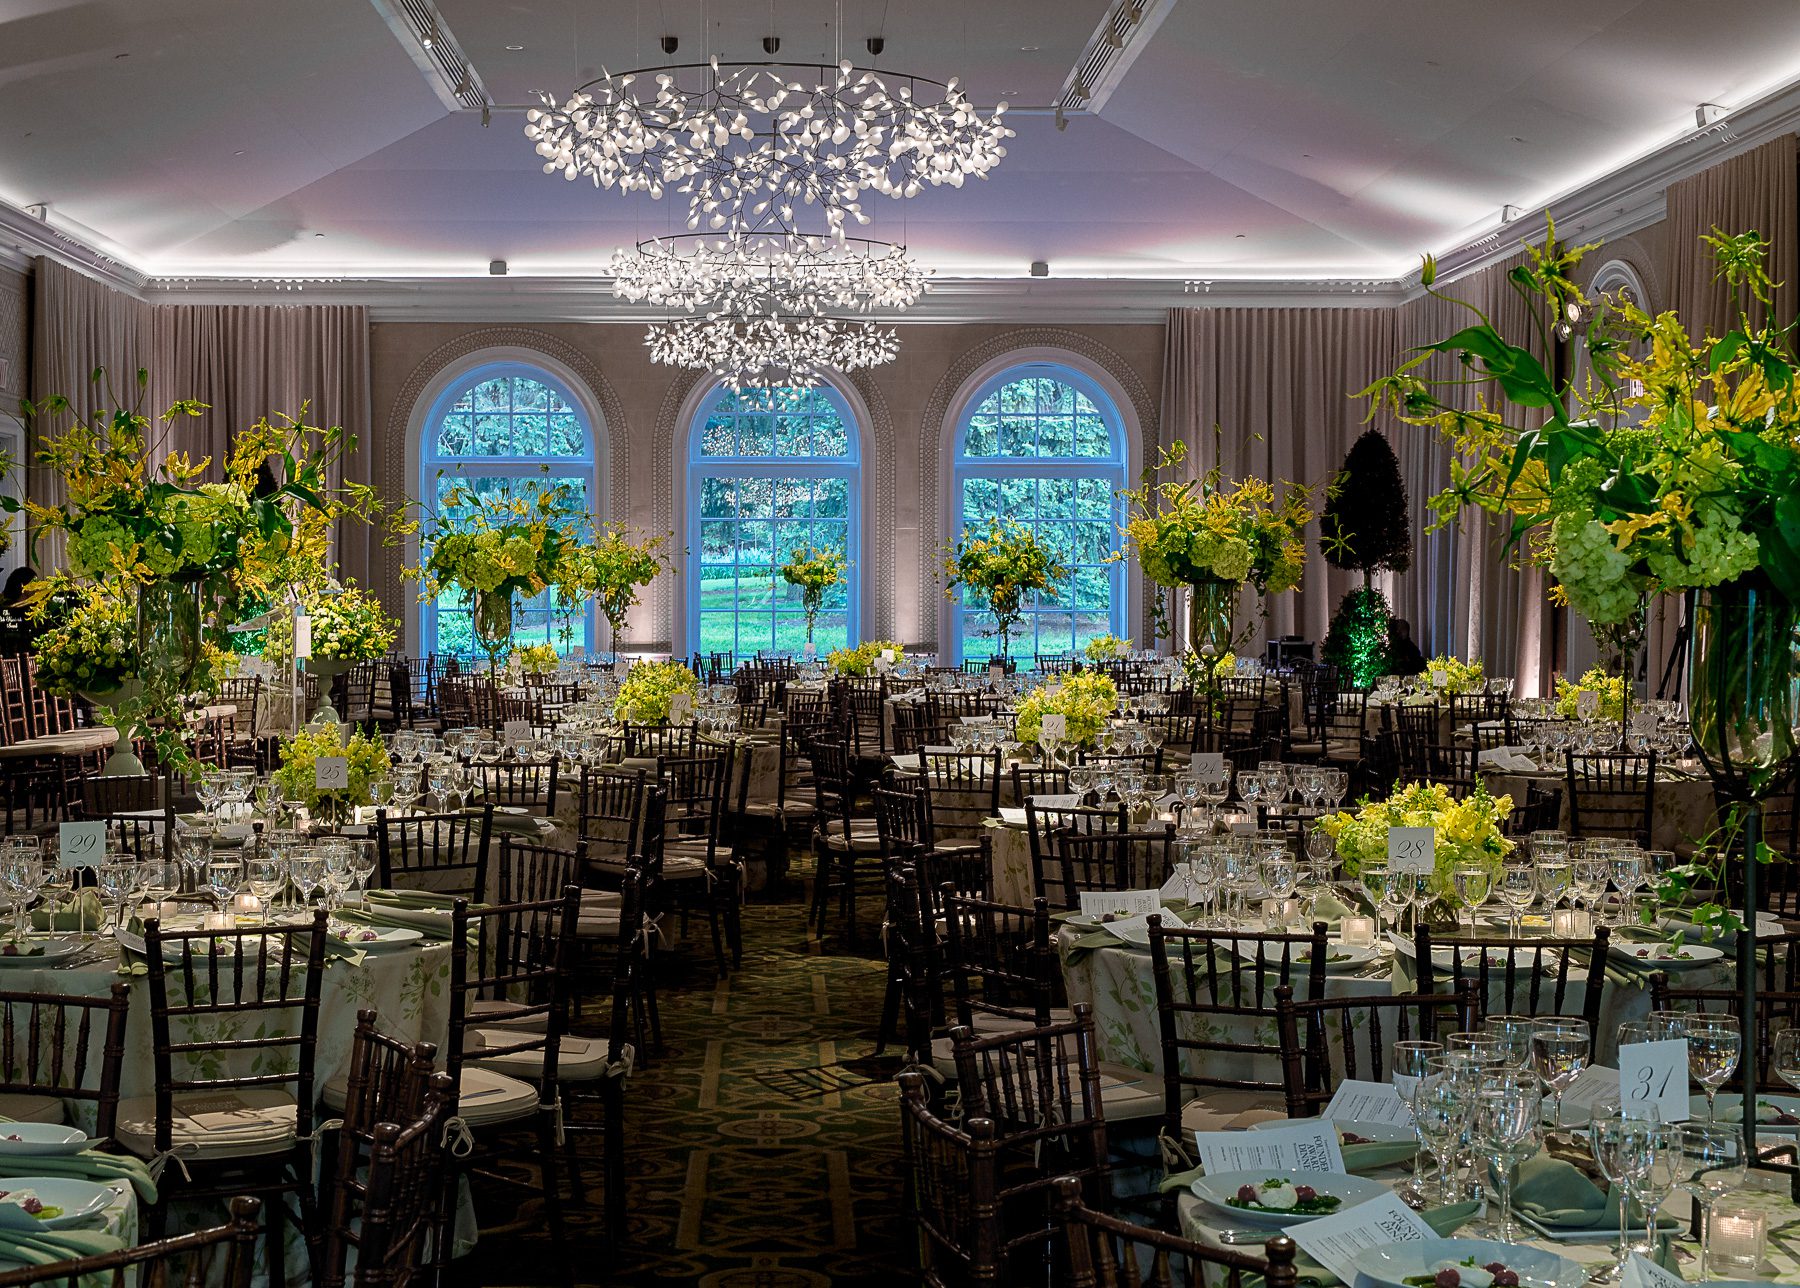 The Garden Terrace Room - Indoor & Outdoor Wedding Venue at NYBG